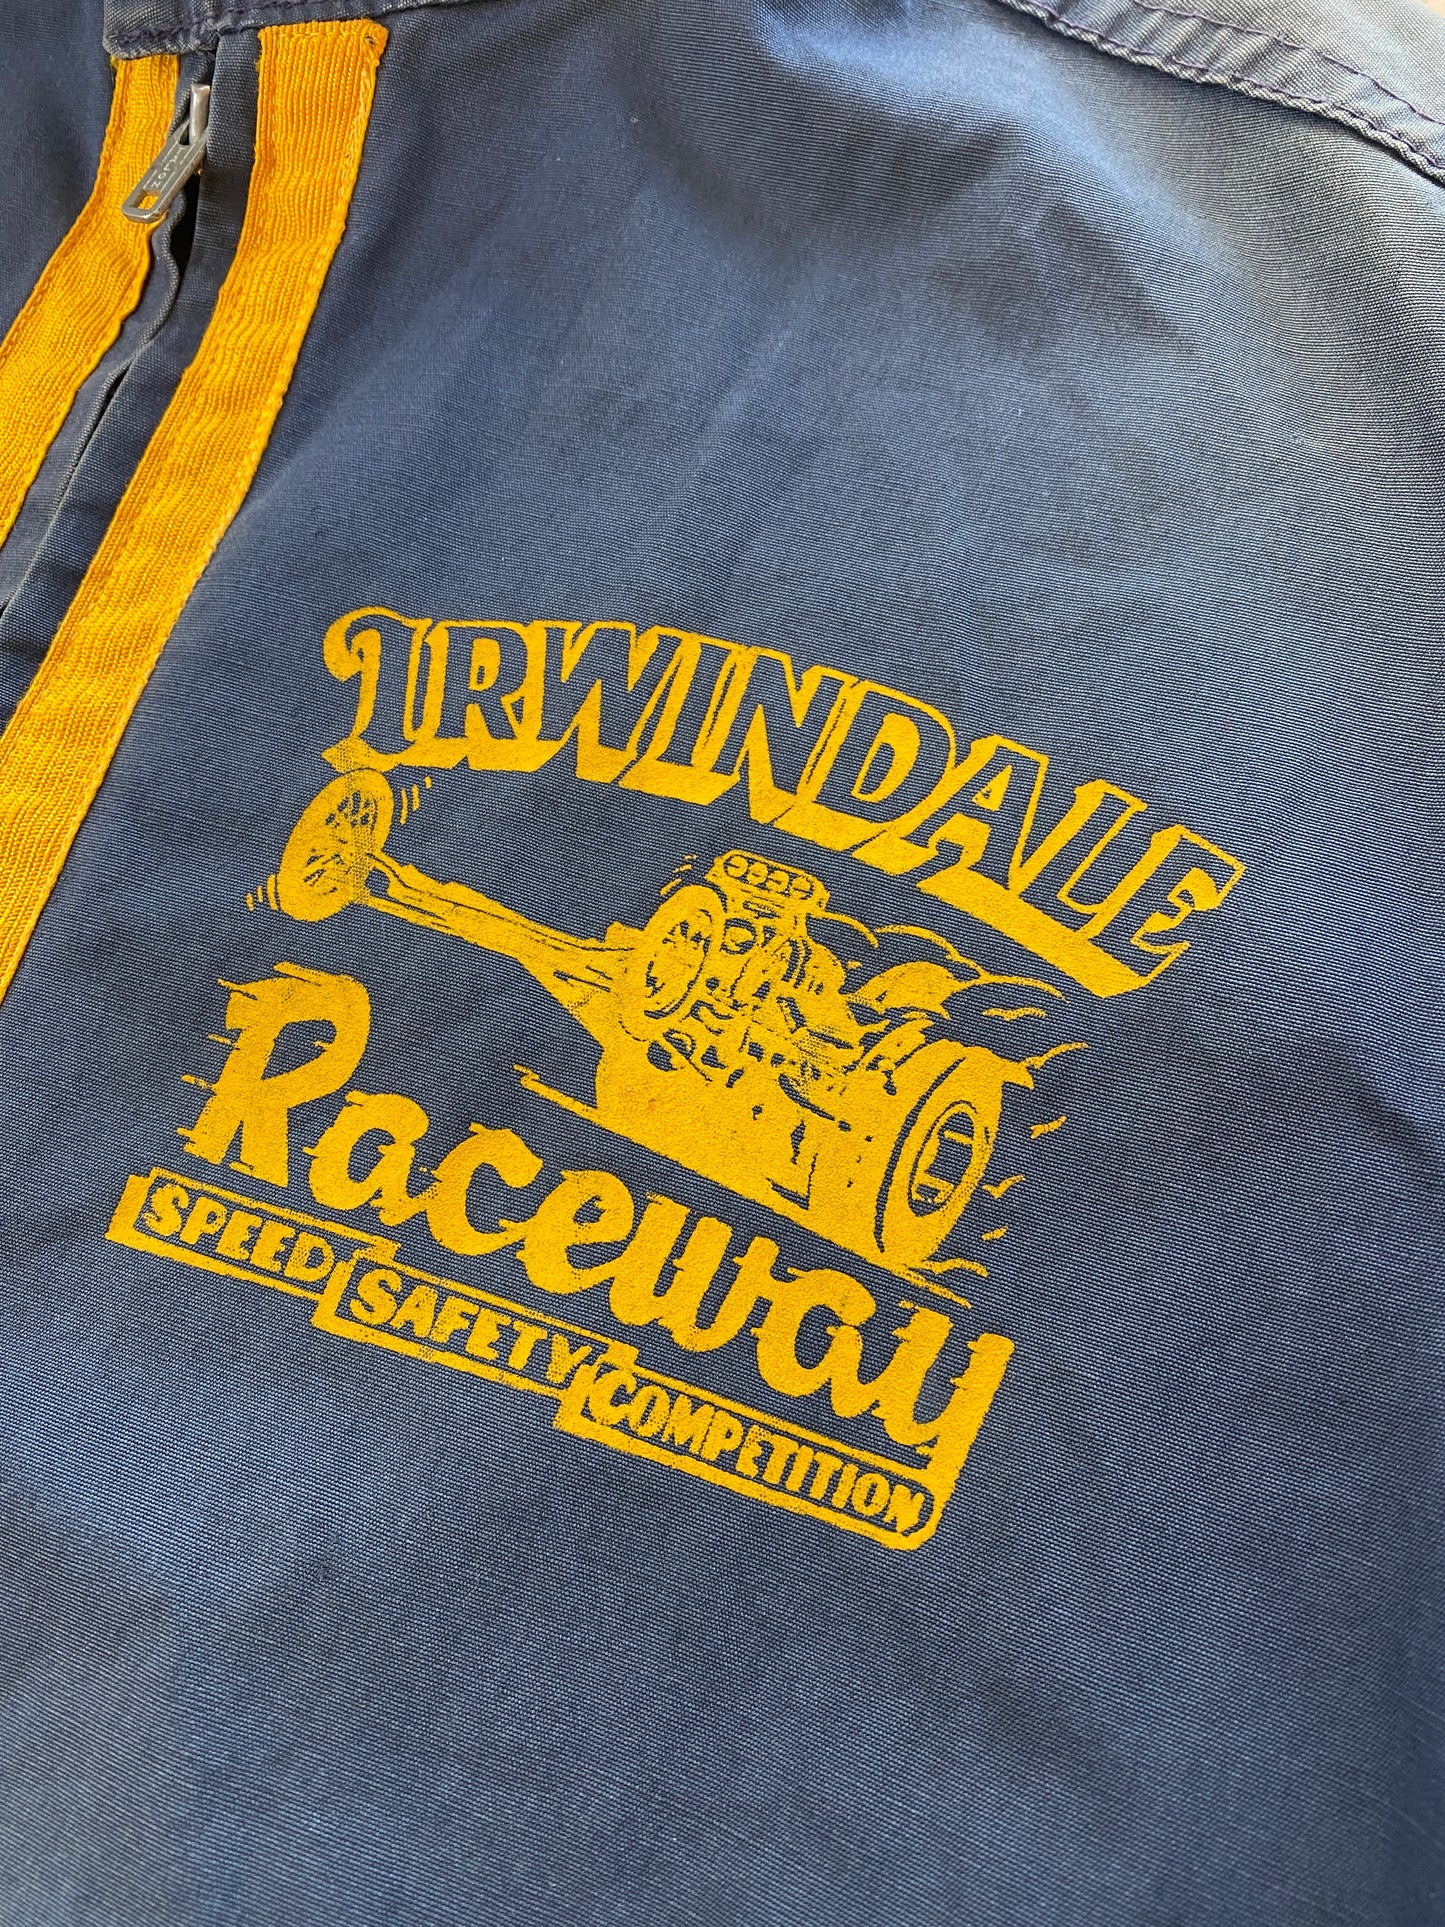 1960s Irwindale Raceway Jacket Men's Size S. SOLD